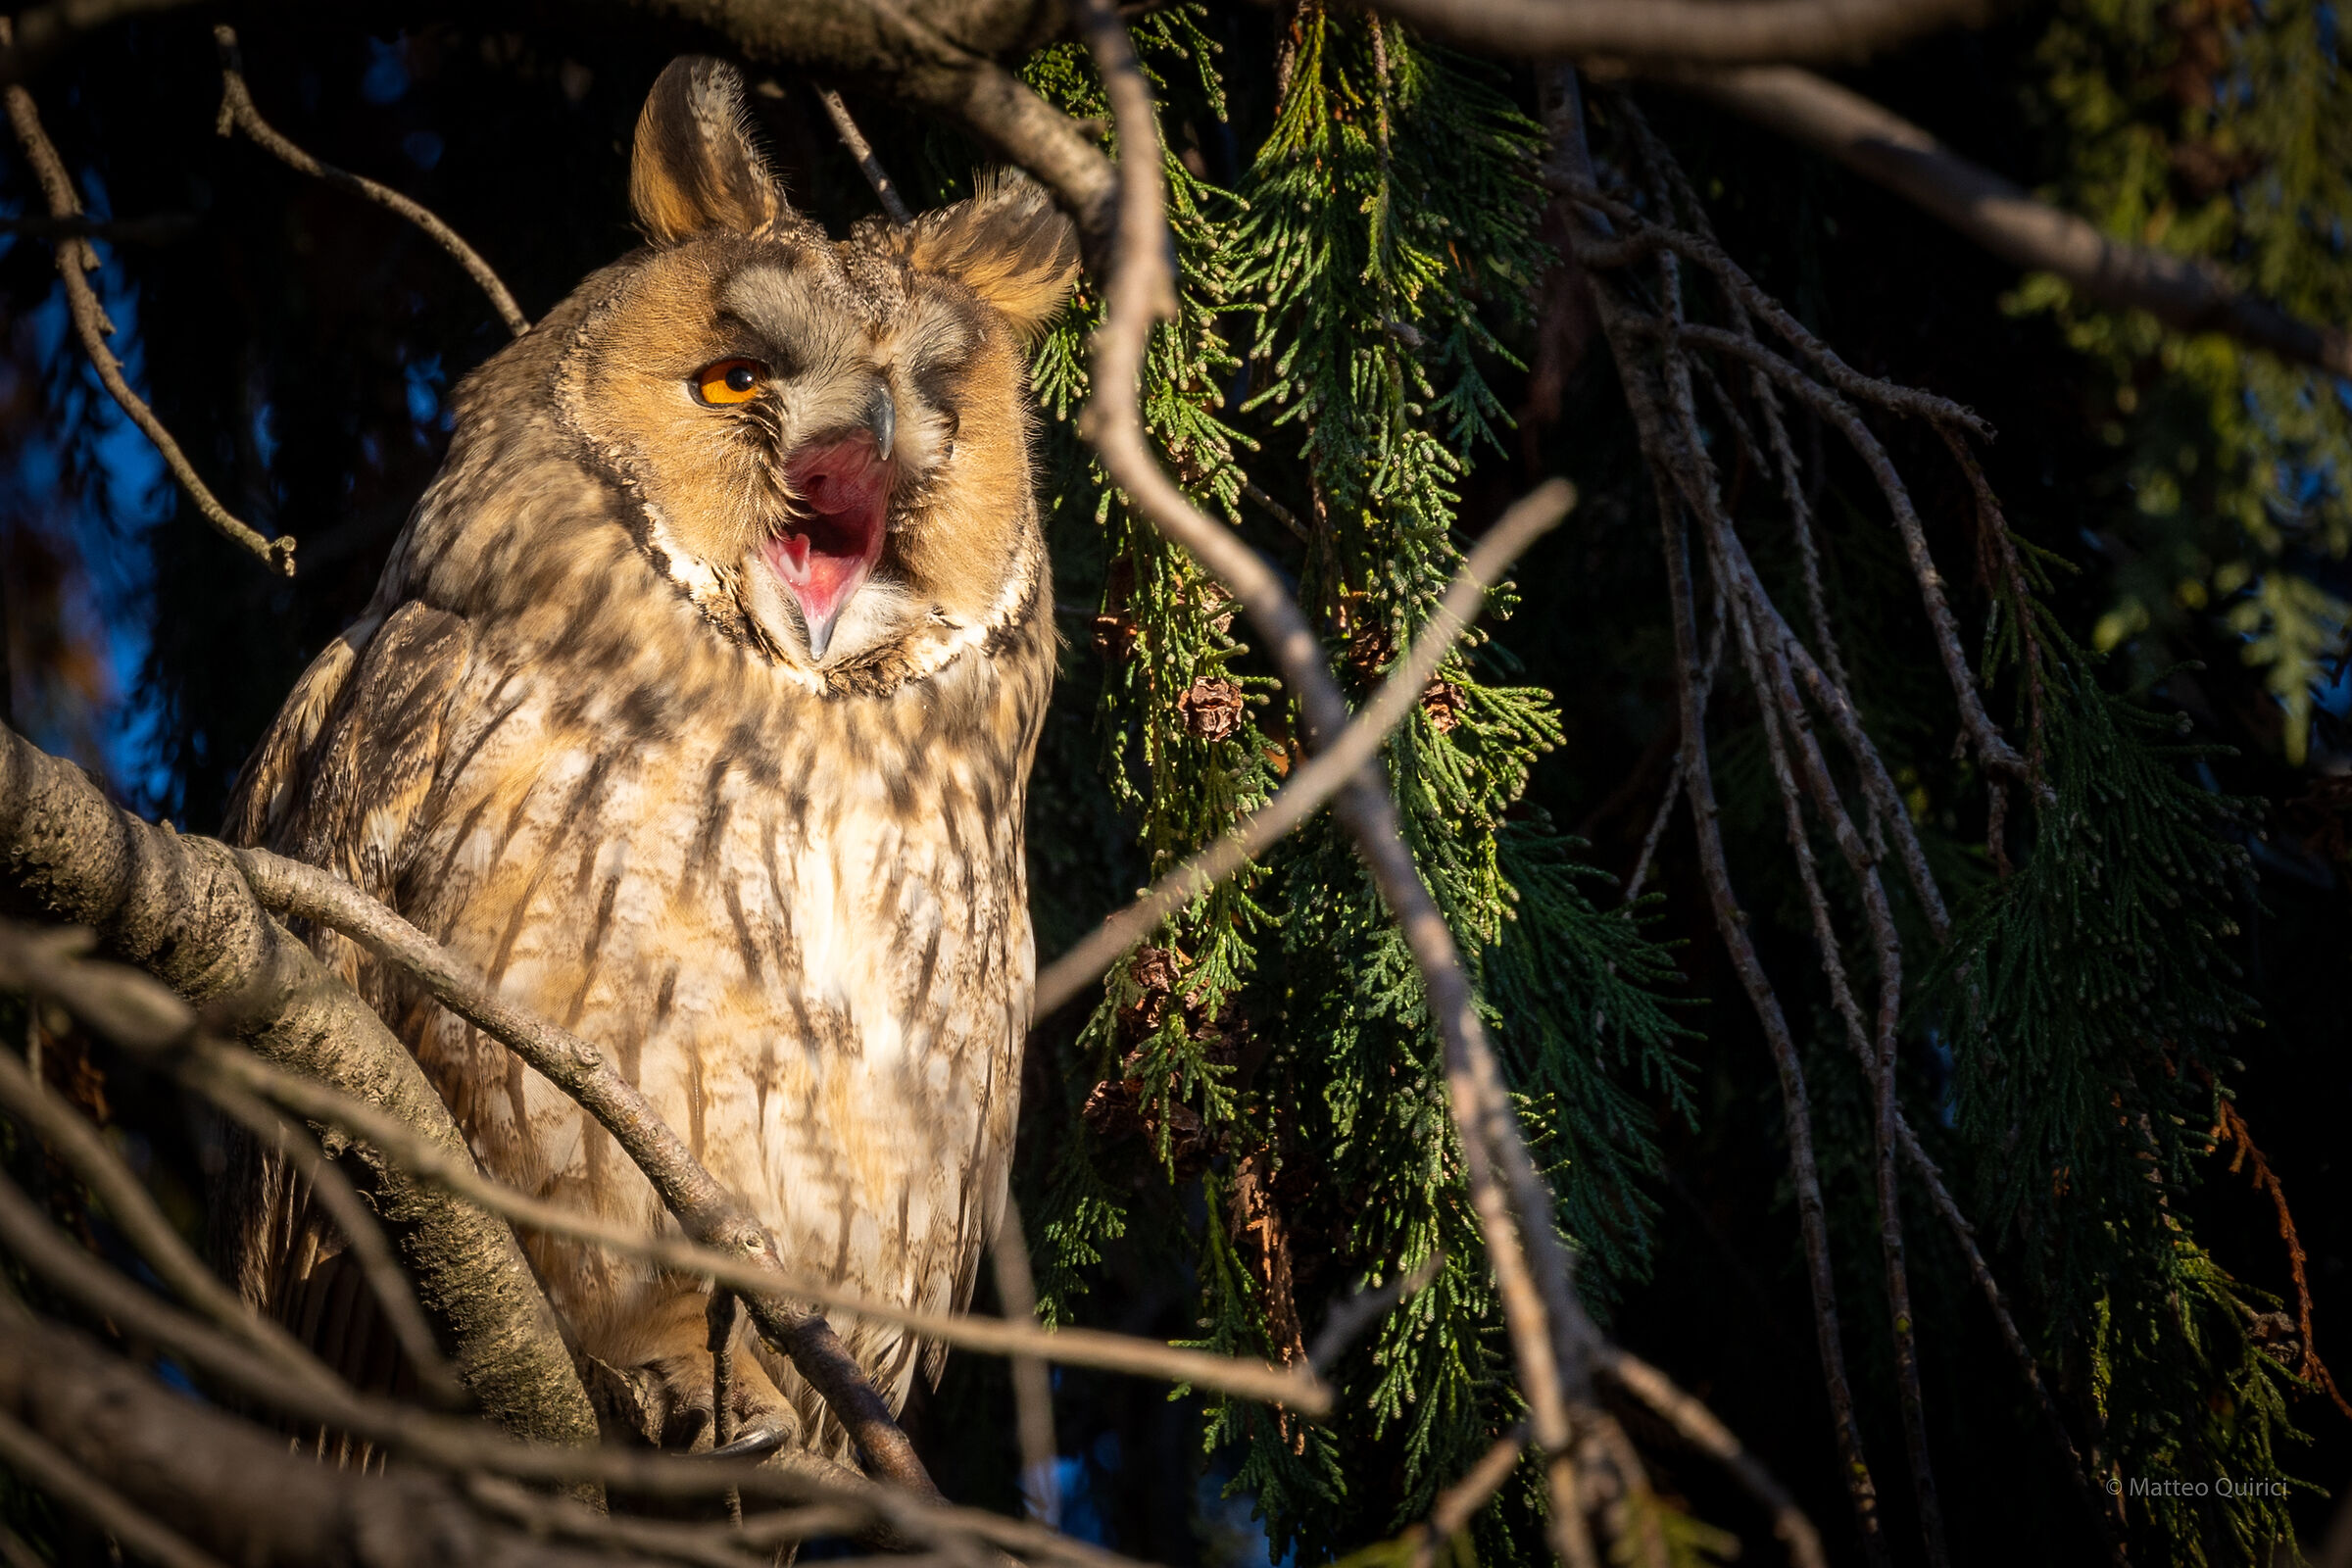 Common owl upon awakening...